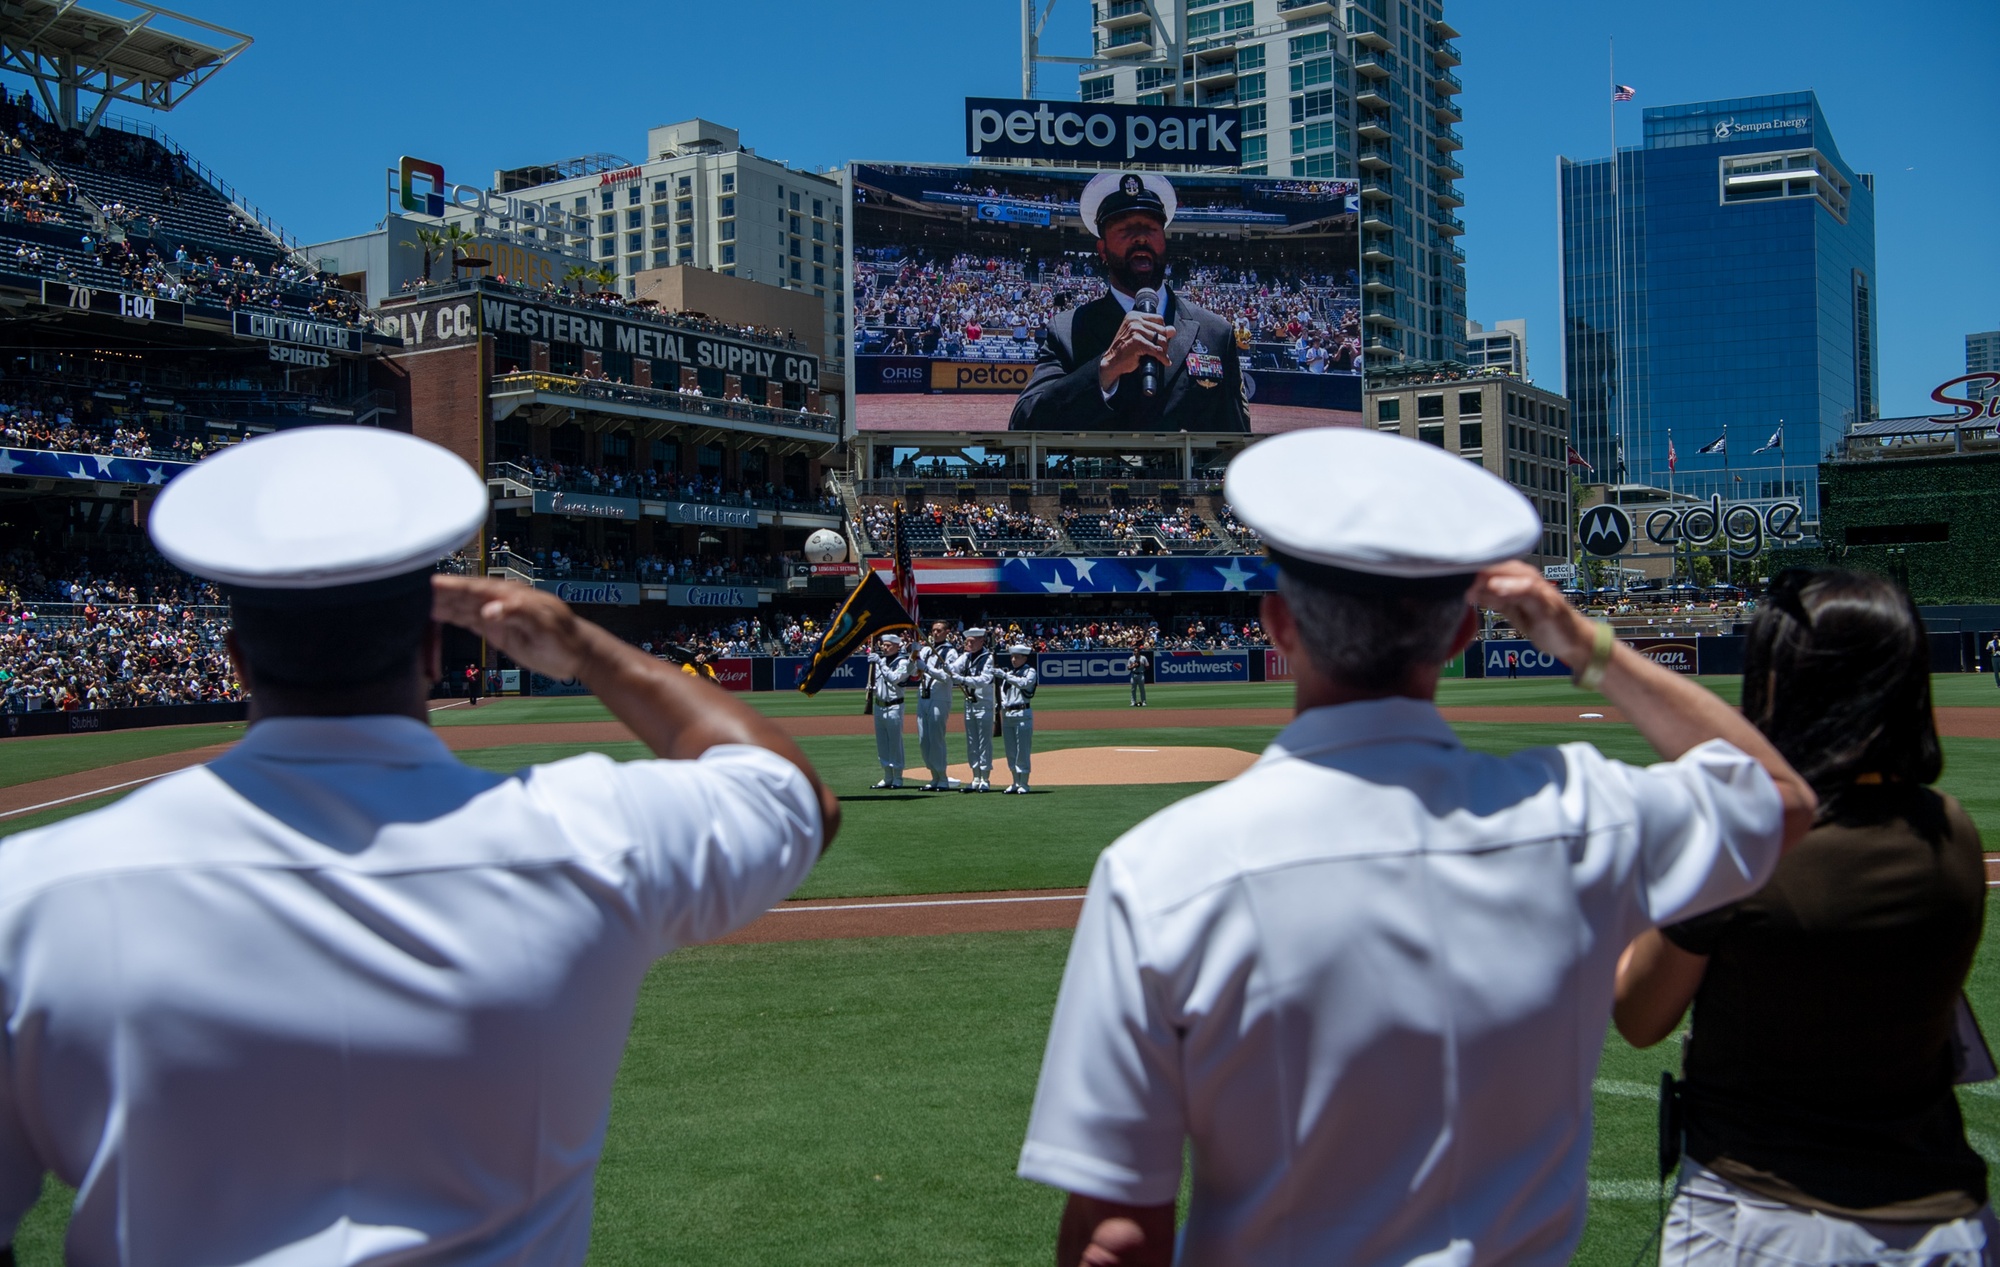 DVIDS - Images - U.S. Navy All-Stars Vs. San Diego Padres Alumni